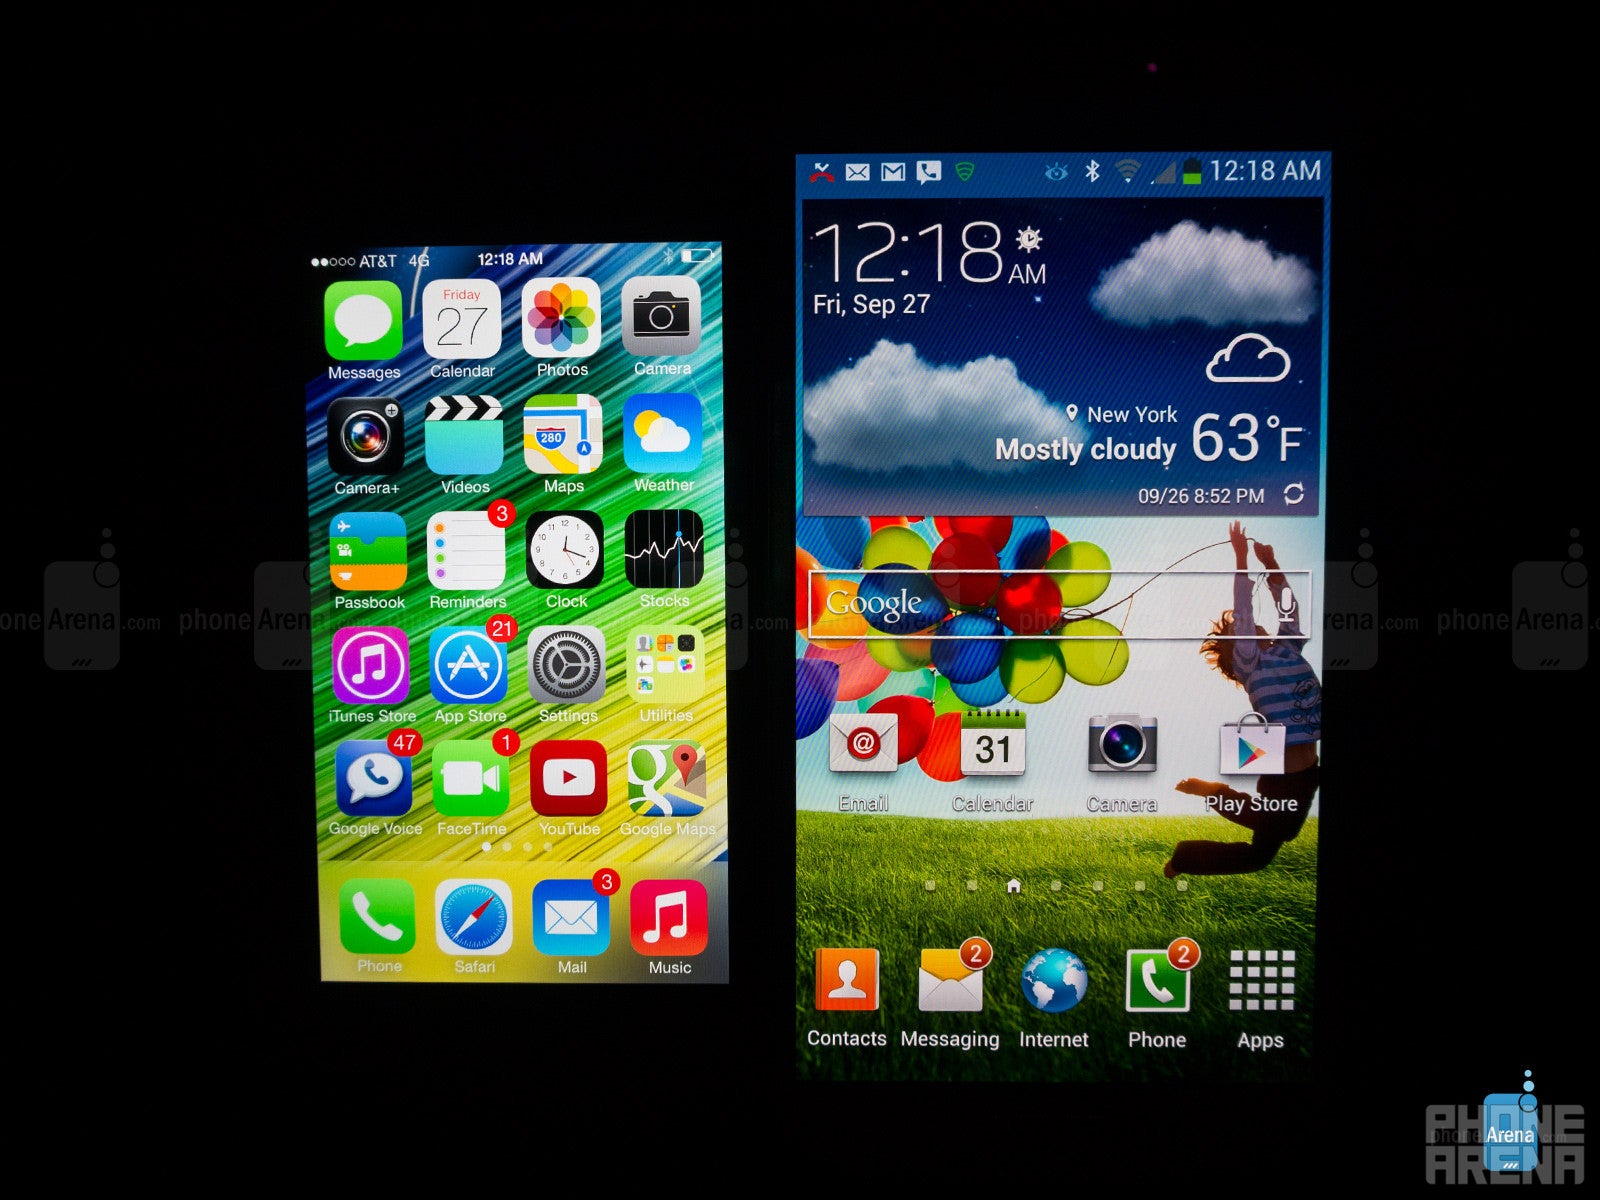 Apple iPhone 5s vs Samsung Galaxy S4